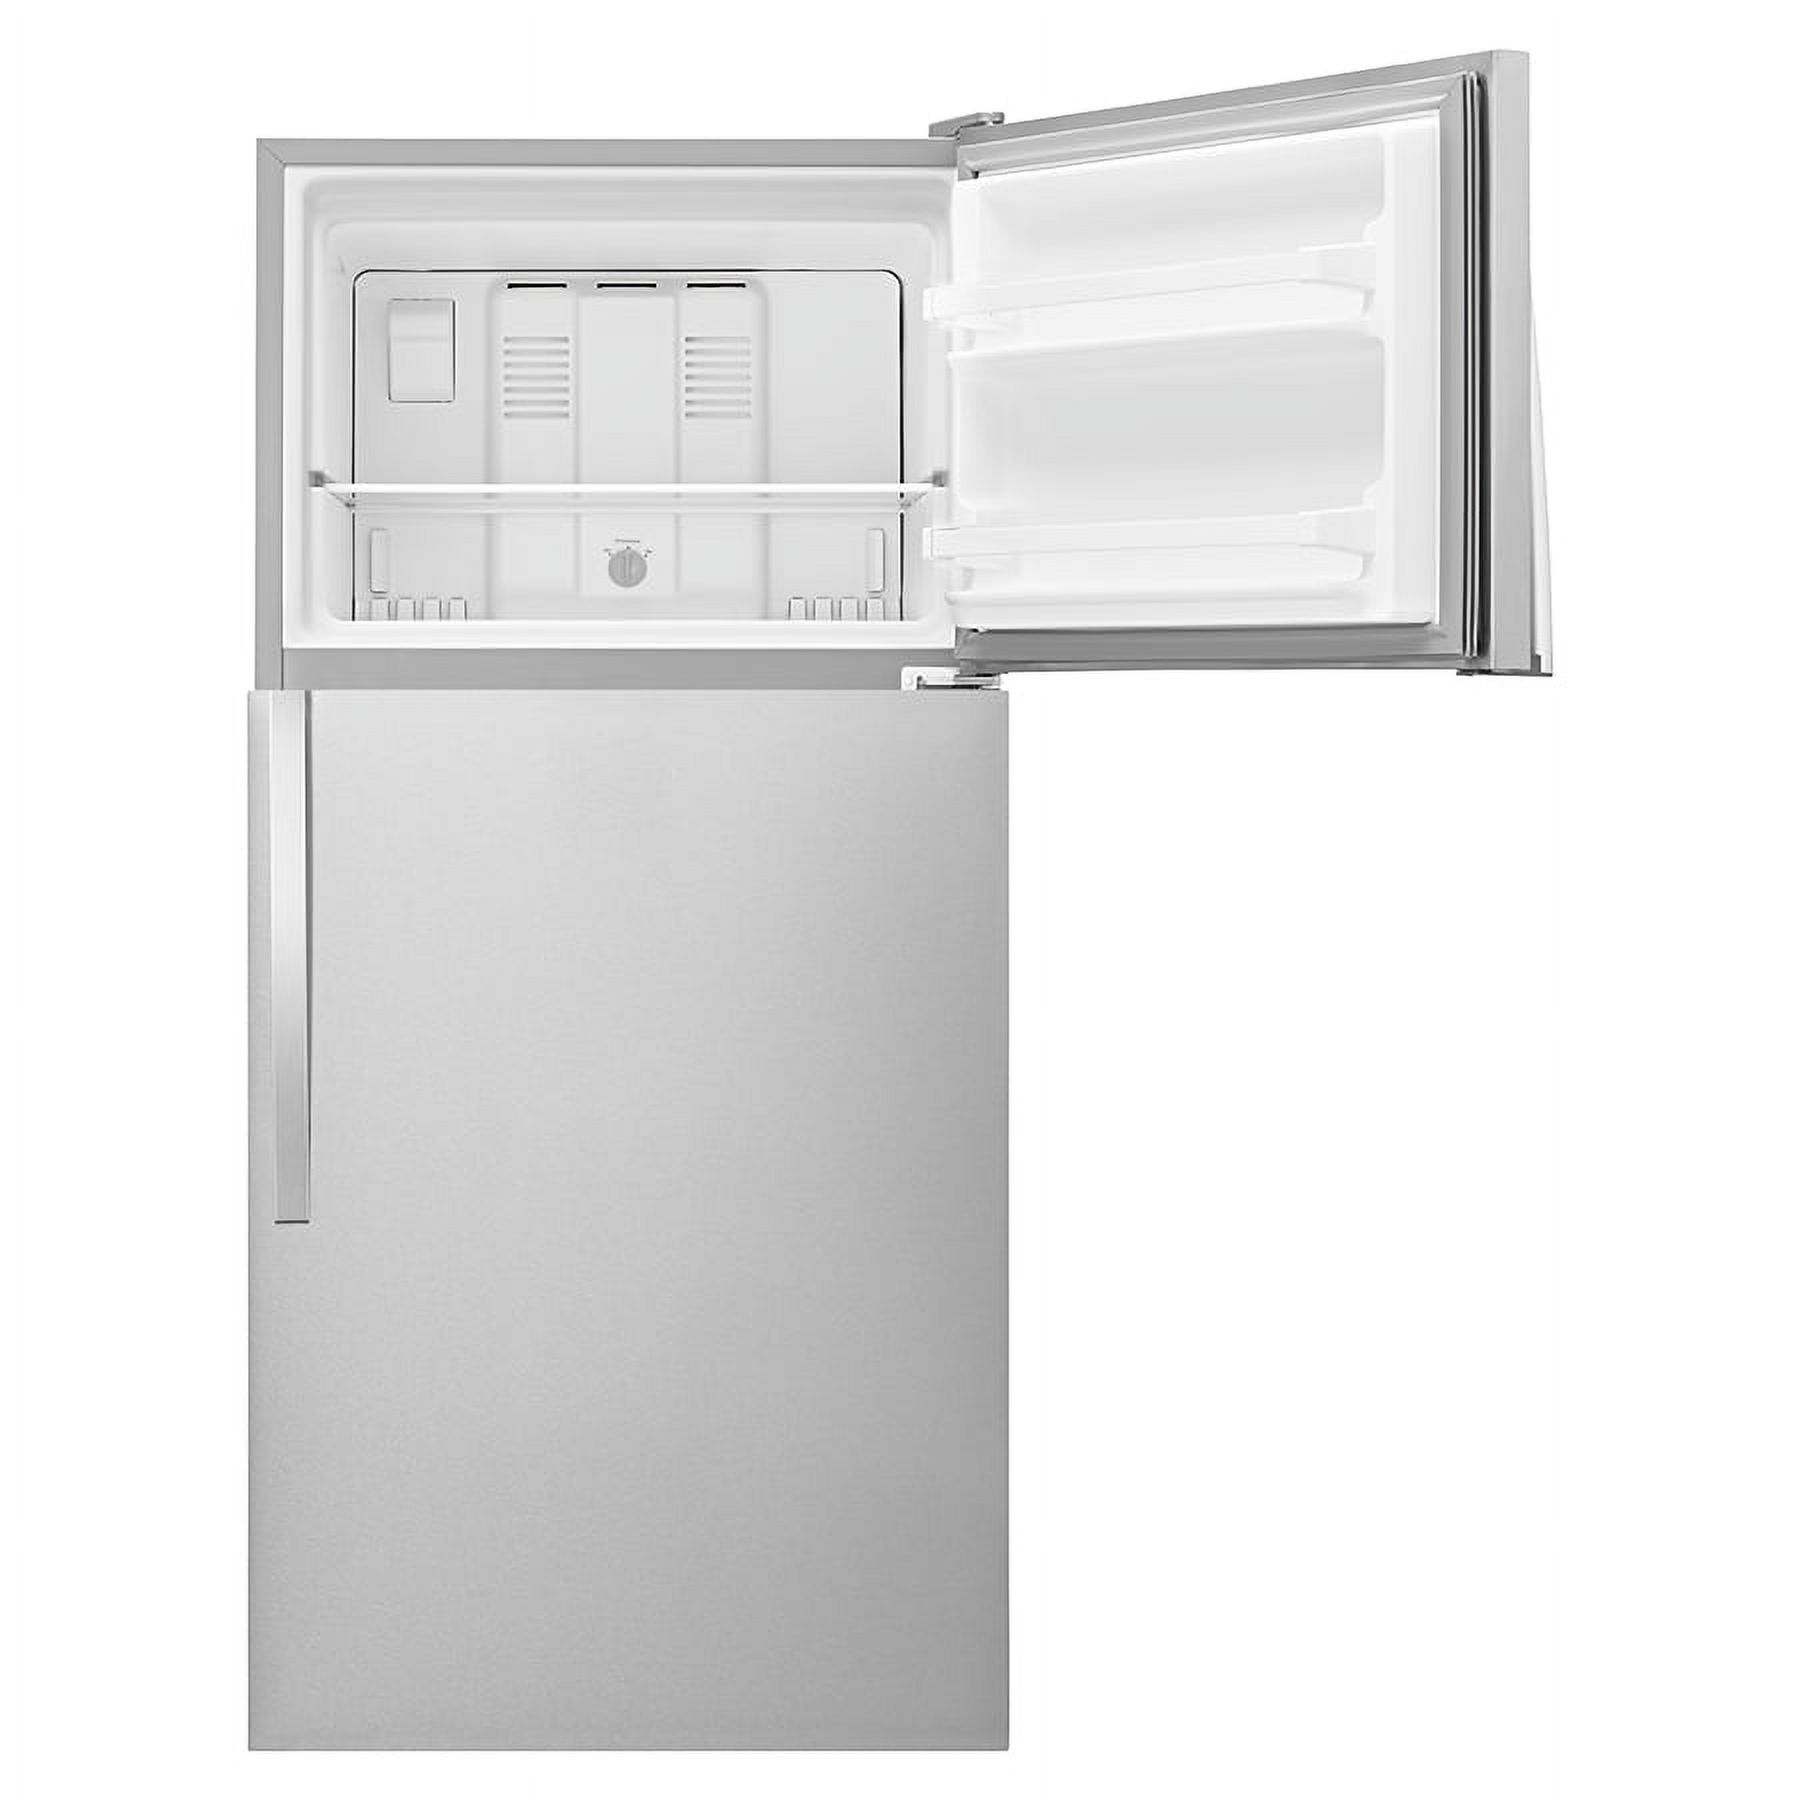 Whirlpool® WRT318FZDM: 30-inch Wide Top Freezer Refrigerator - 18 cu. ft - Stainless Steel. - image 5 of 8